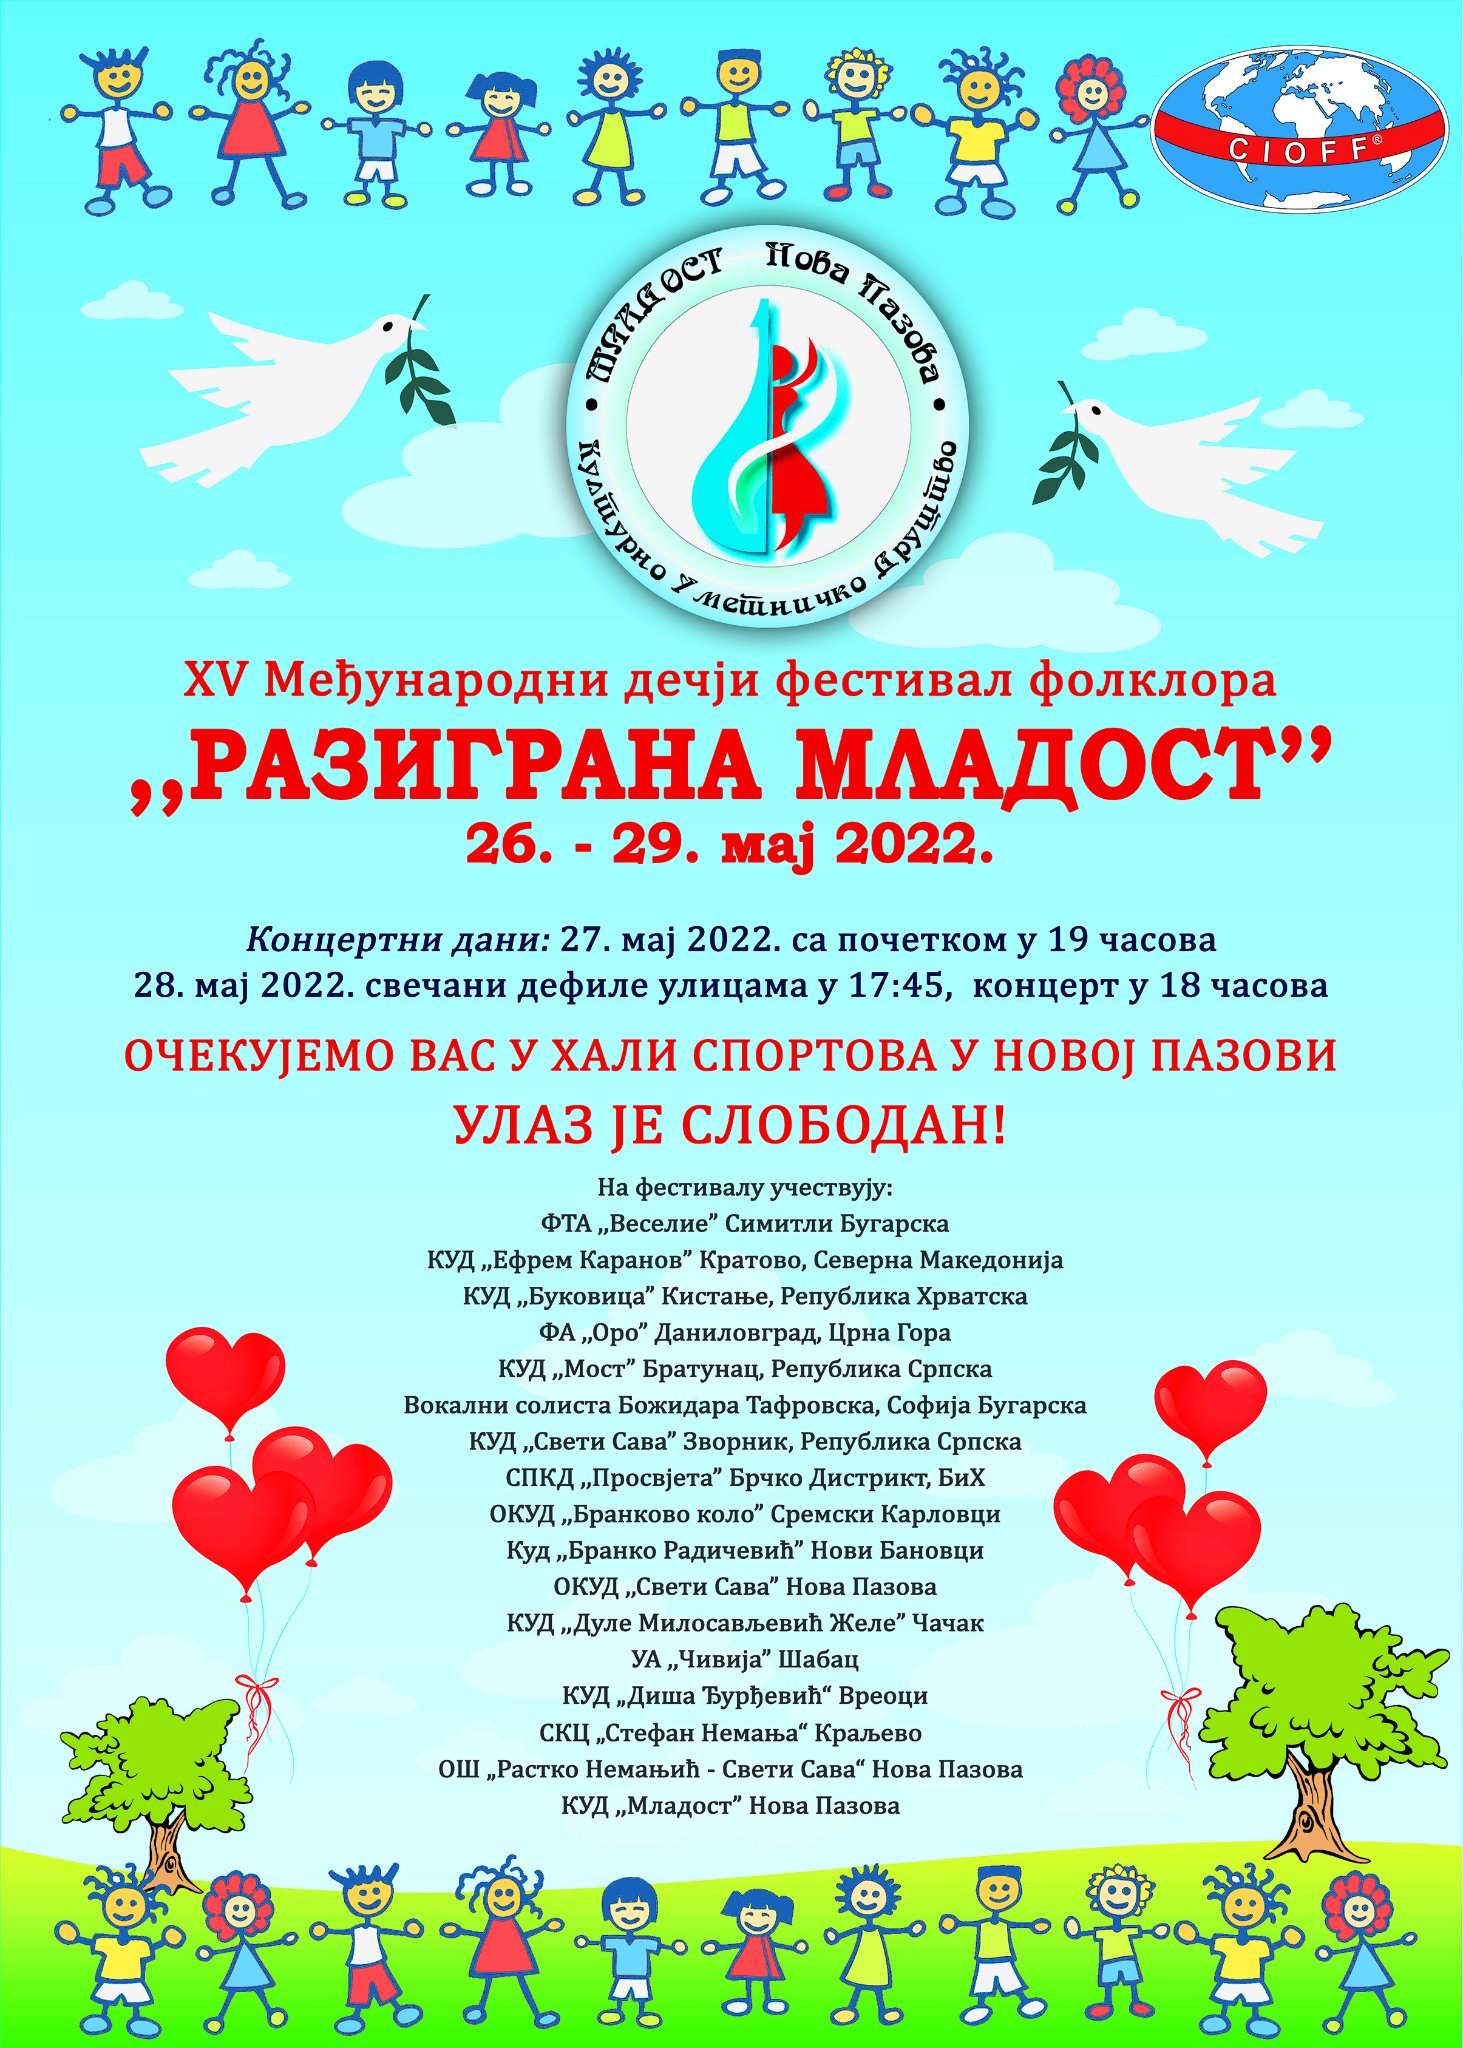 plakat-medjunarodni-decji-festival-folklora-2022-nova-pazova